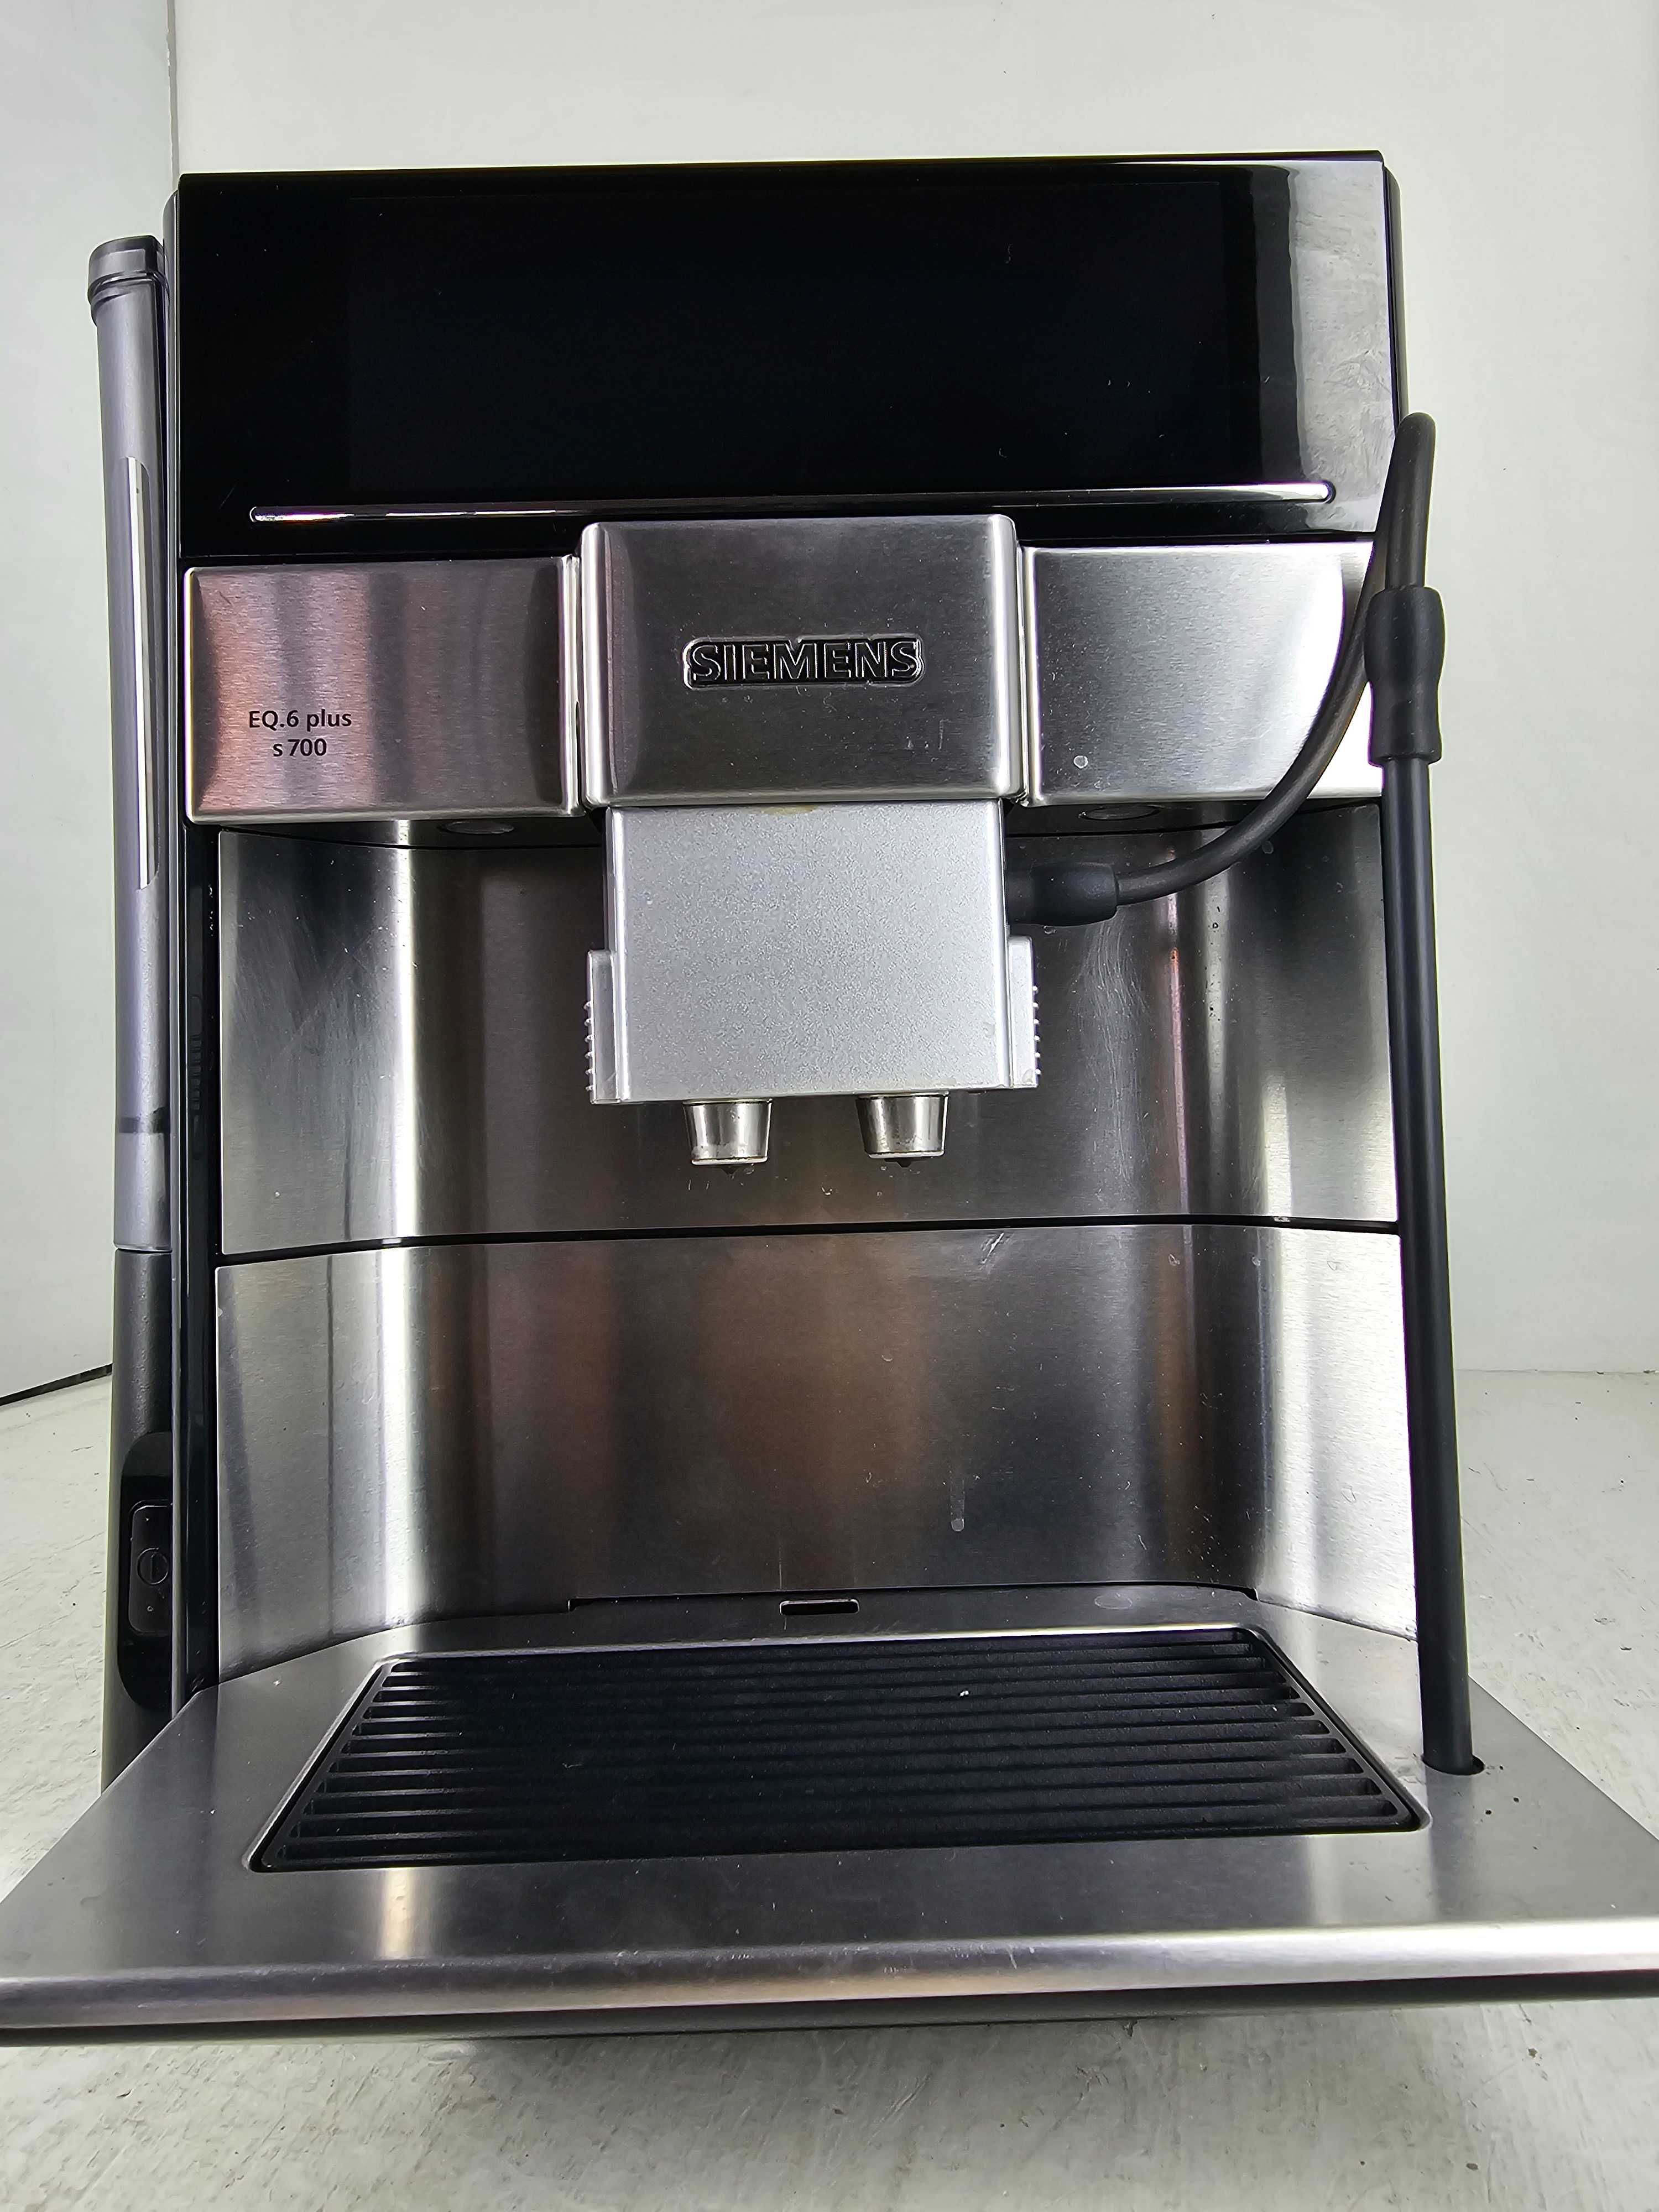 Espressor automat SIEMENS TE65703DE EQ6 plus s700, 1500W, garantie